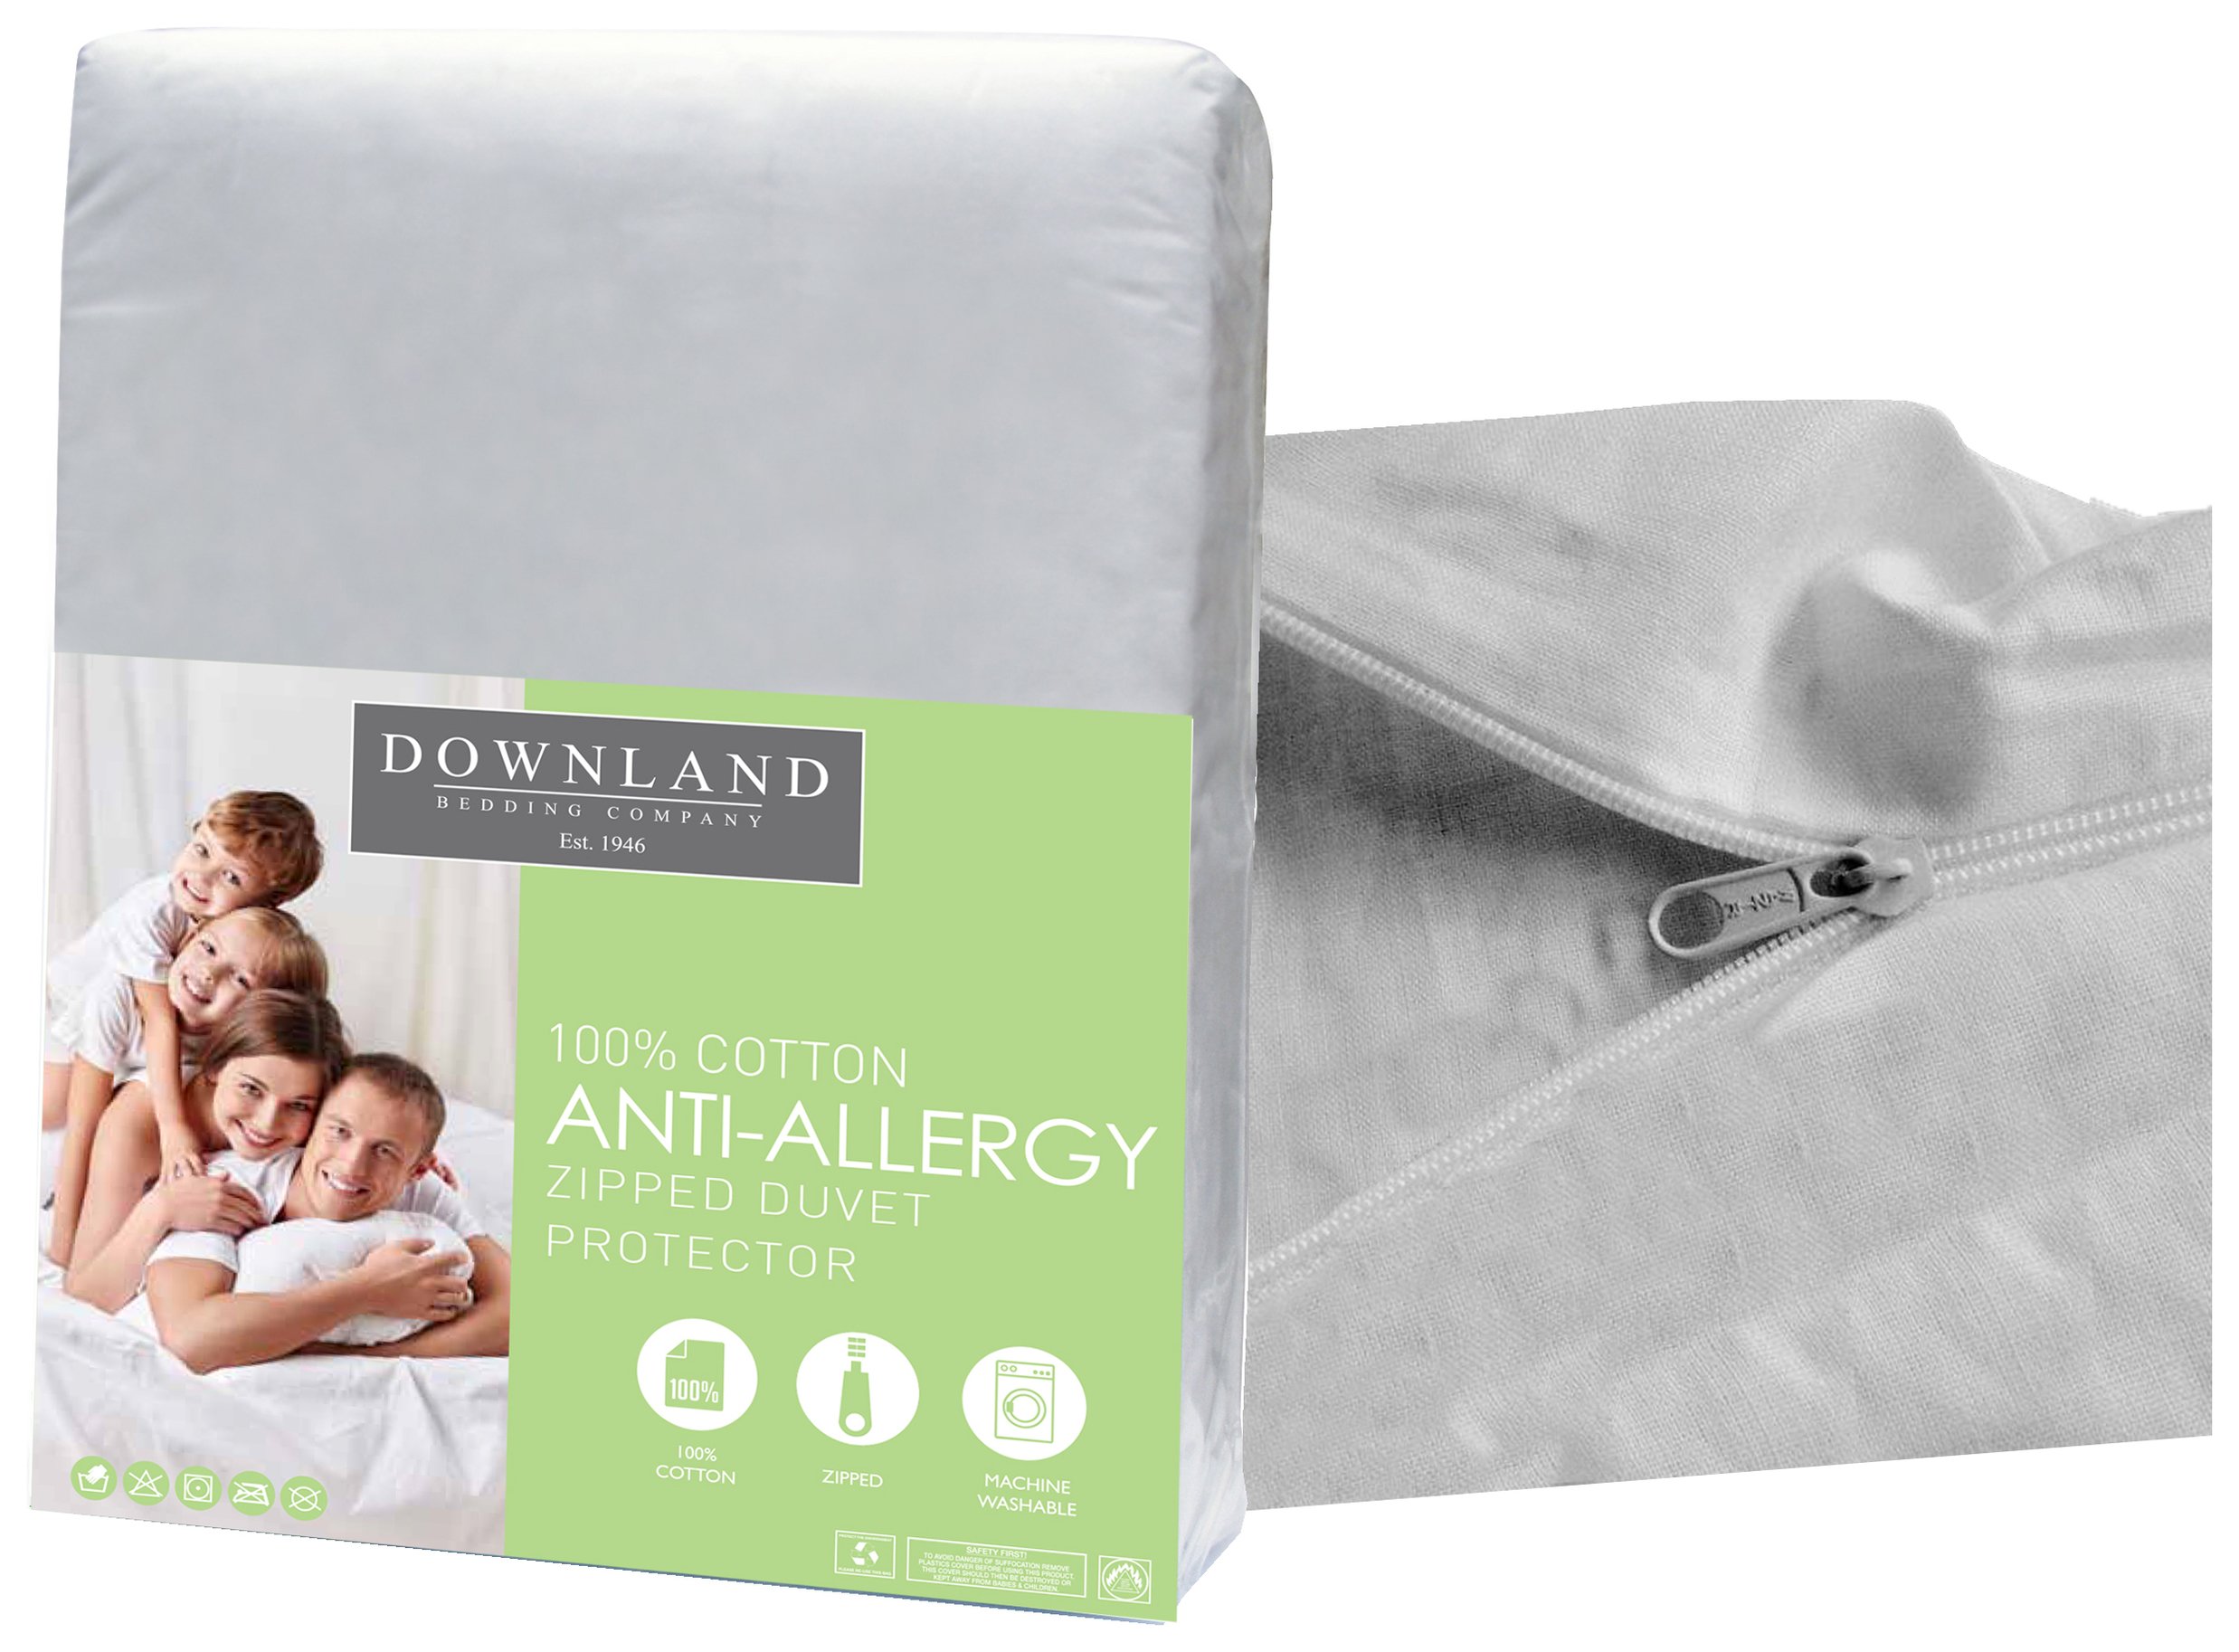 Downland Zipped Anti Allergy Duvet Protector Reviews